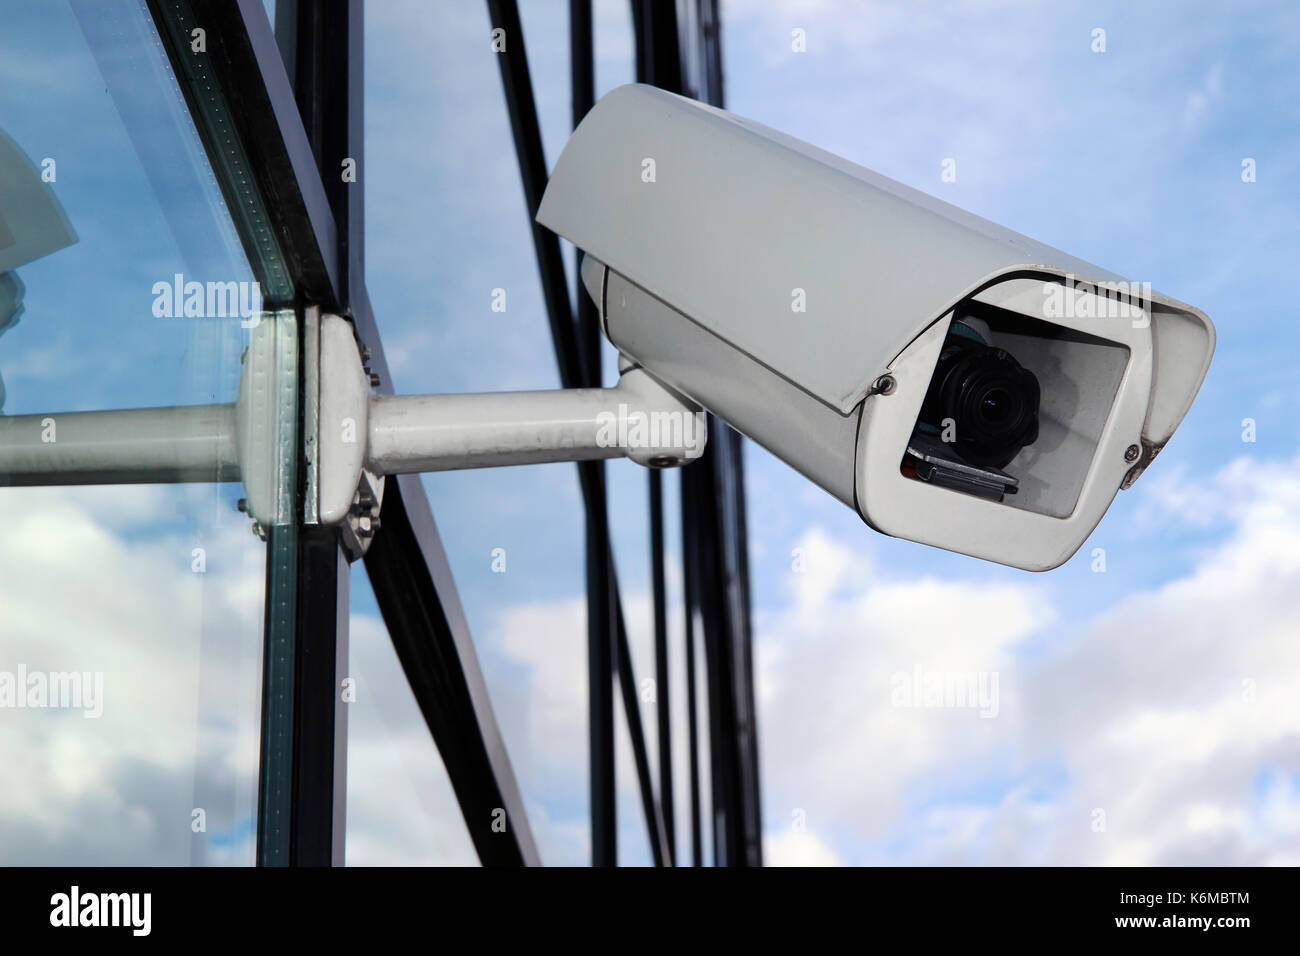 Digital CCTV camera on the glass facade Stock Photo